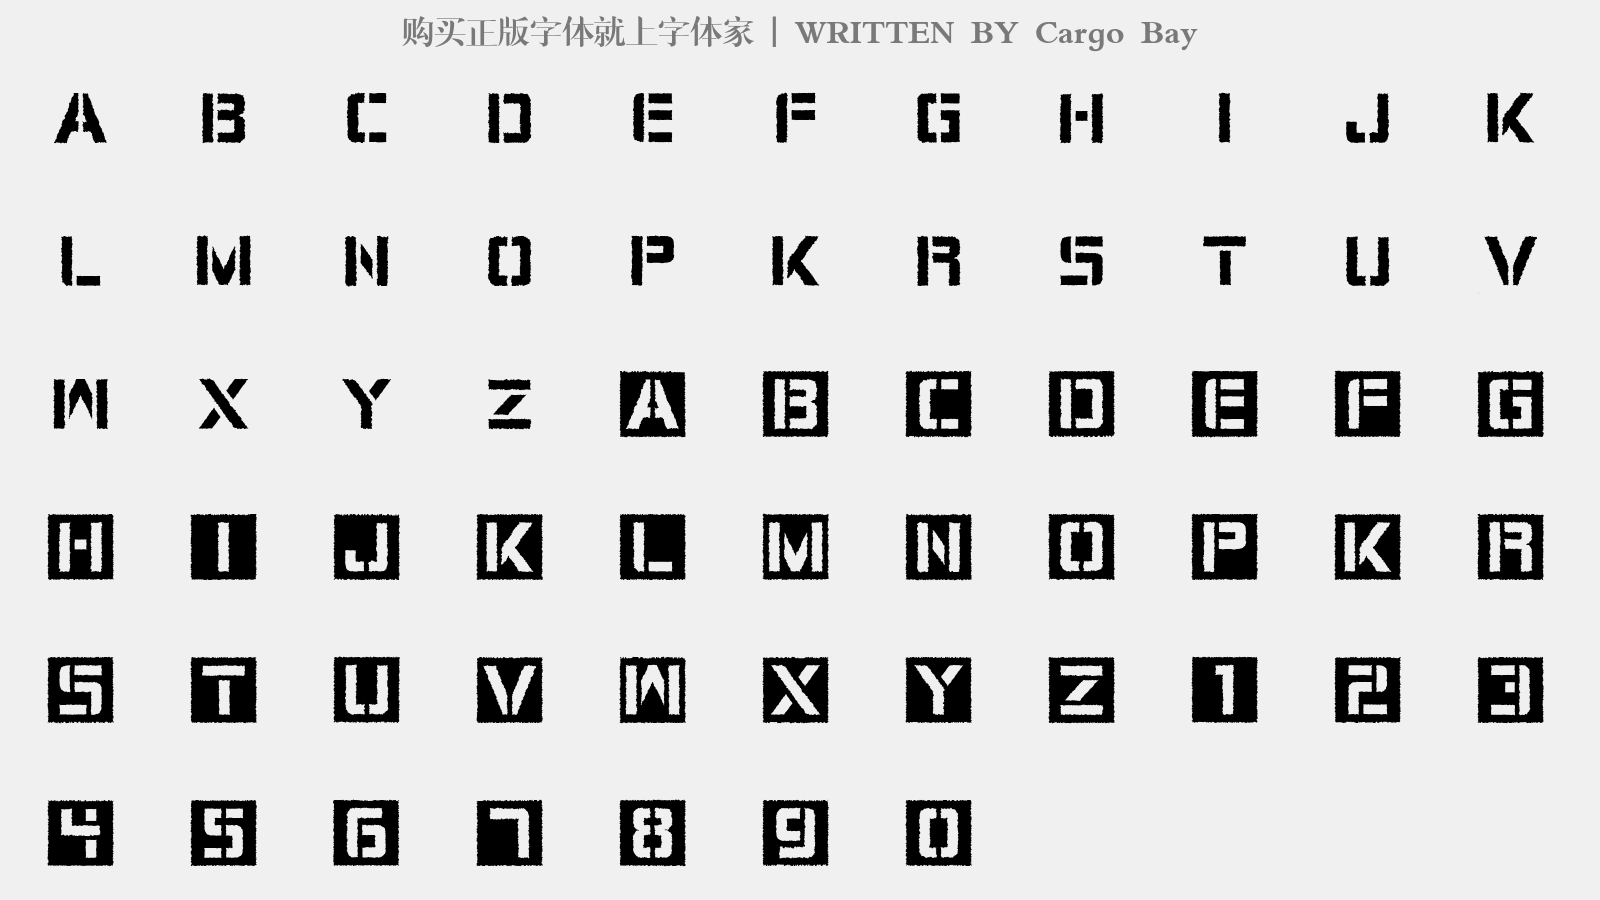 Cargo Bay - 大写字母/小写字母/数字